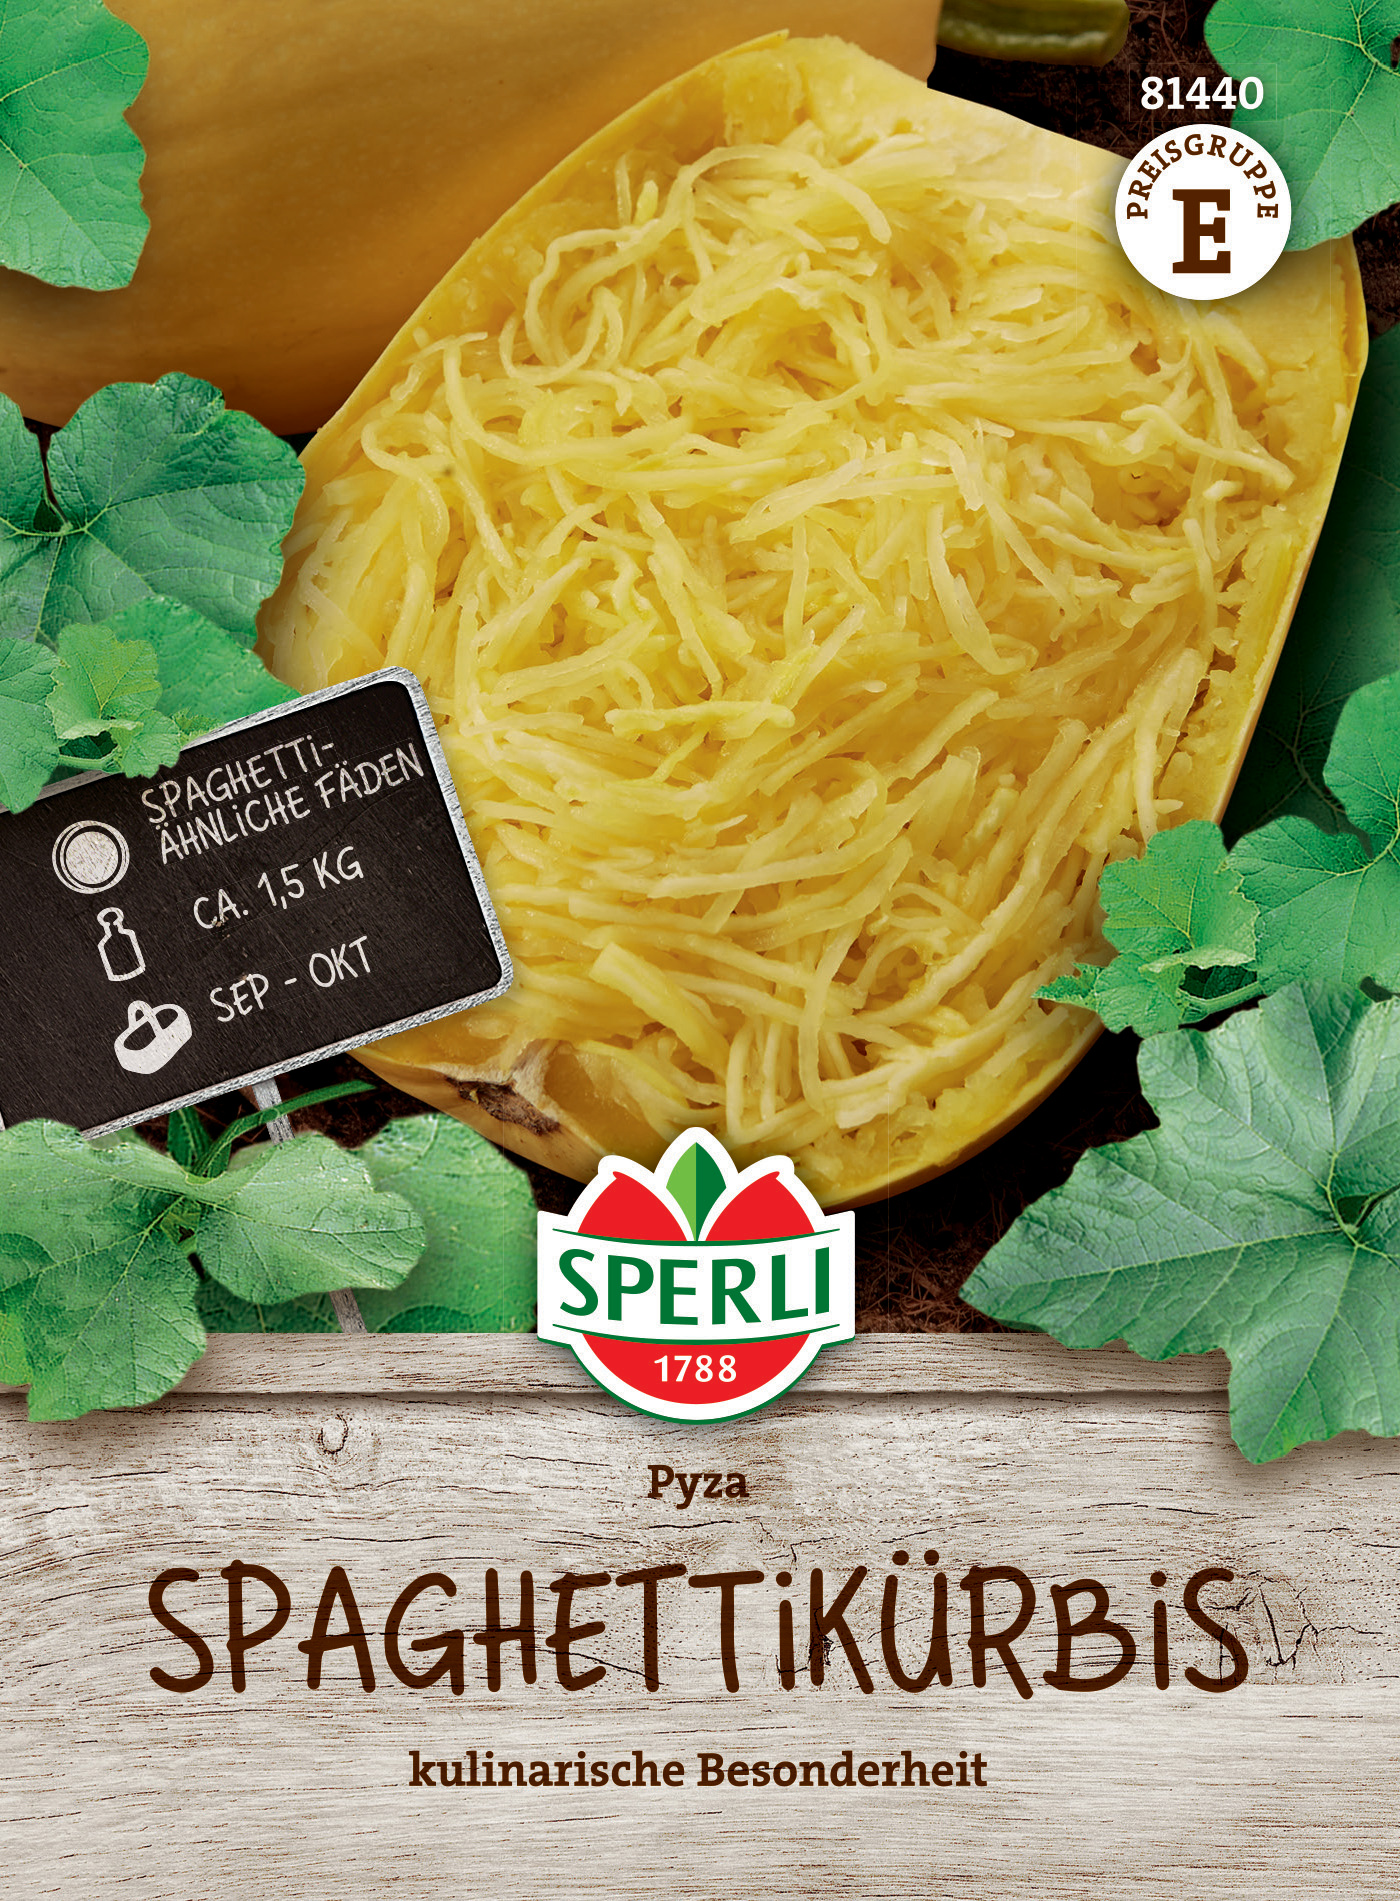 Spaghettikürbis Pyza